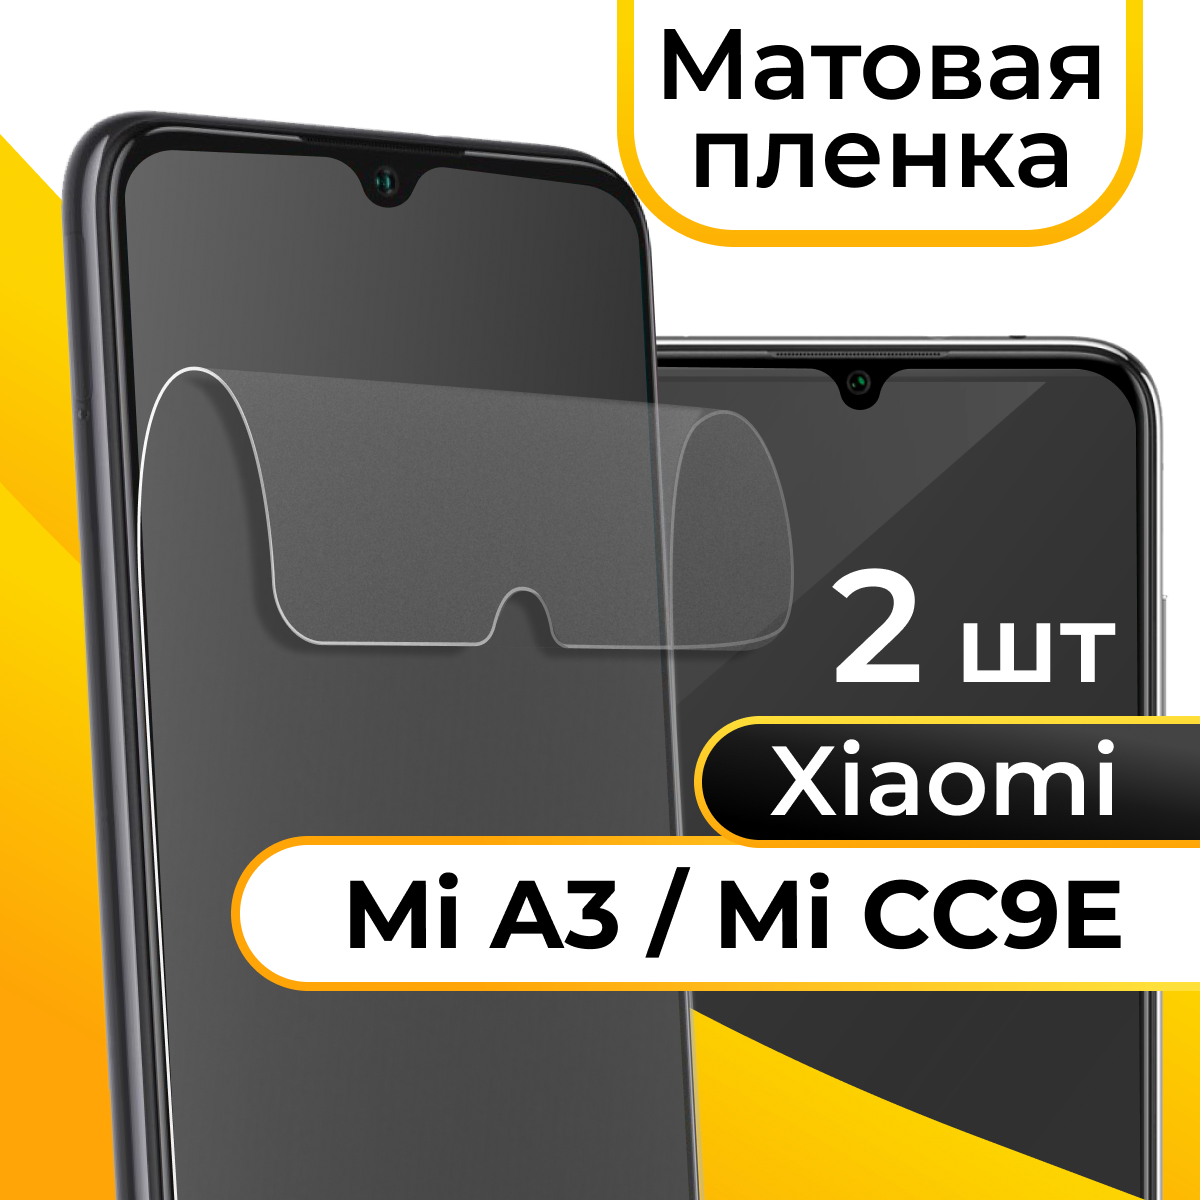 Матовая пленка для смартфона Xiaomi Mi A3 и Mi CC9E / Защитная противоударная пленка на телефон Сяоми Ми А3 и Ми СС9Е / Гидрогелевая пленка